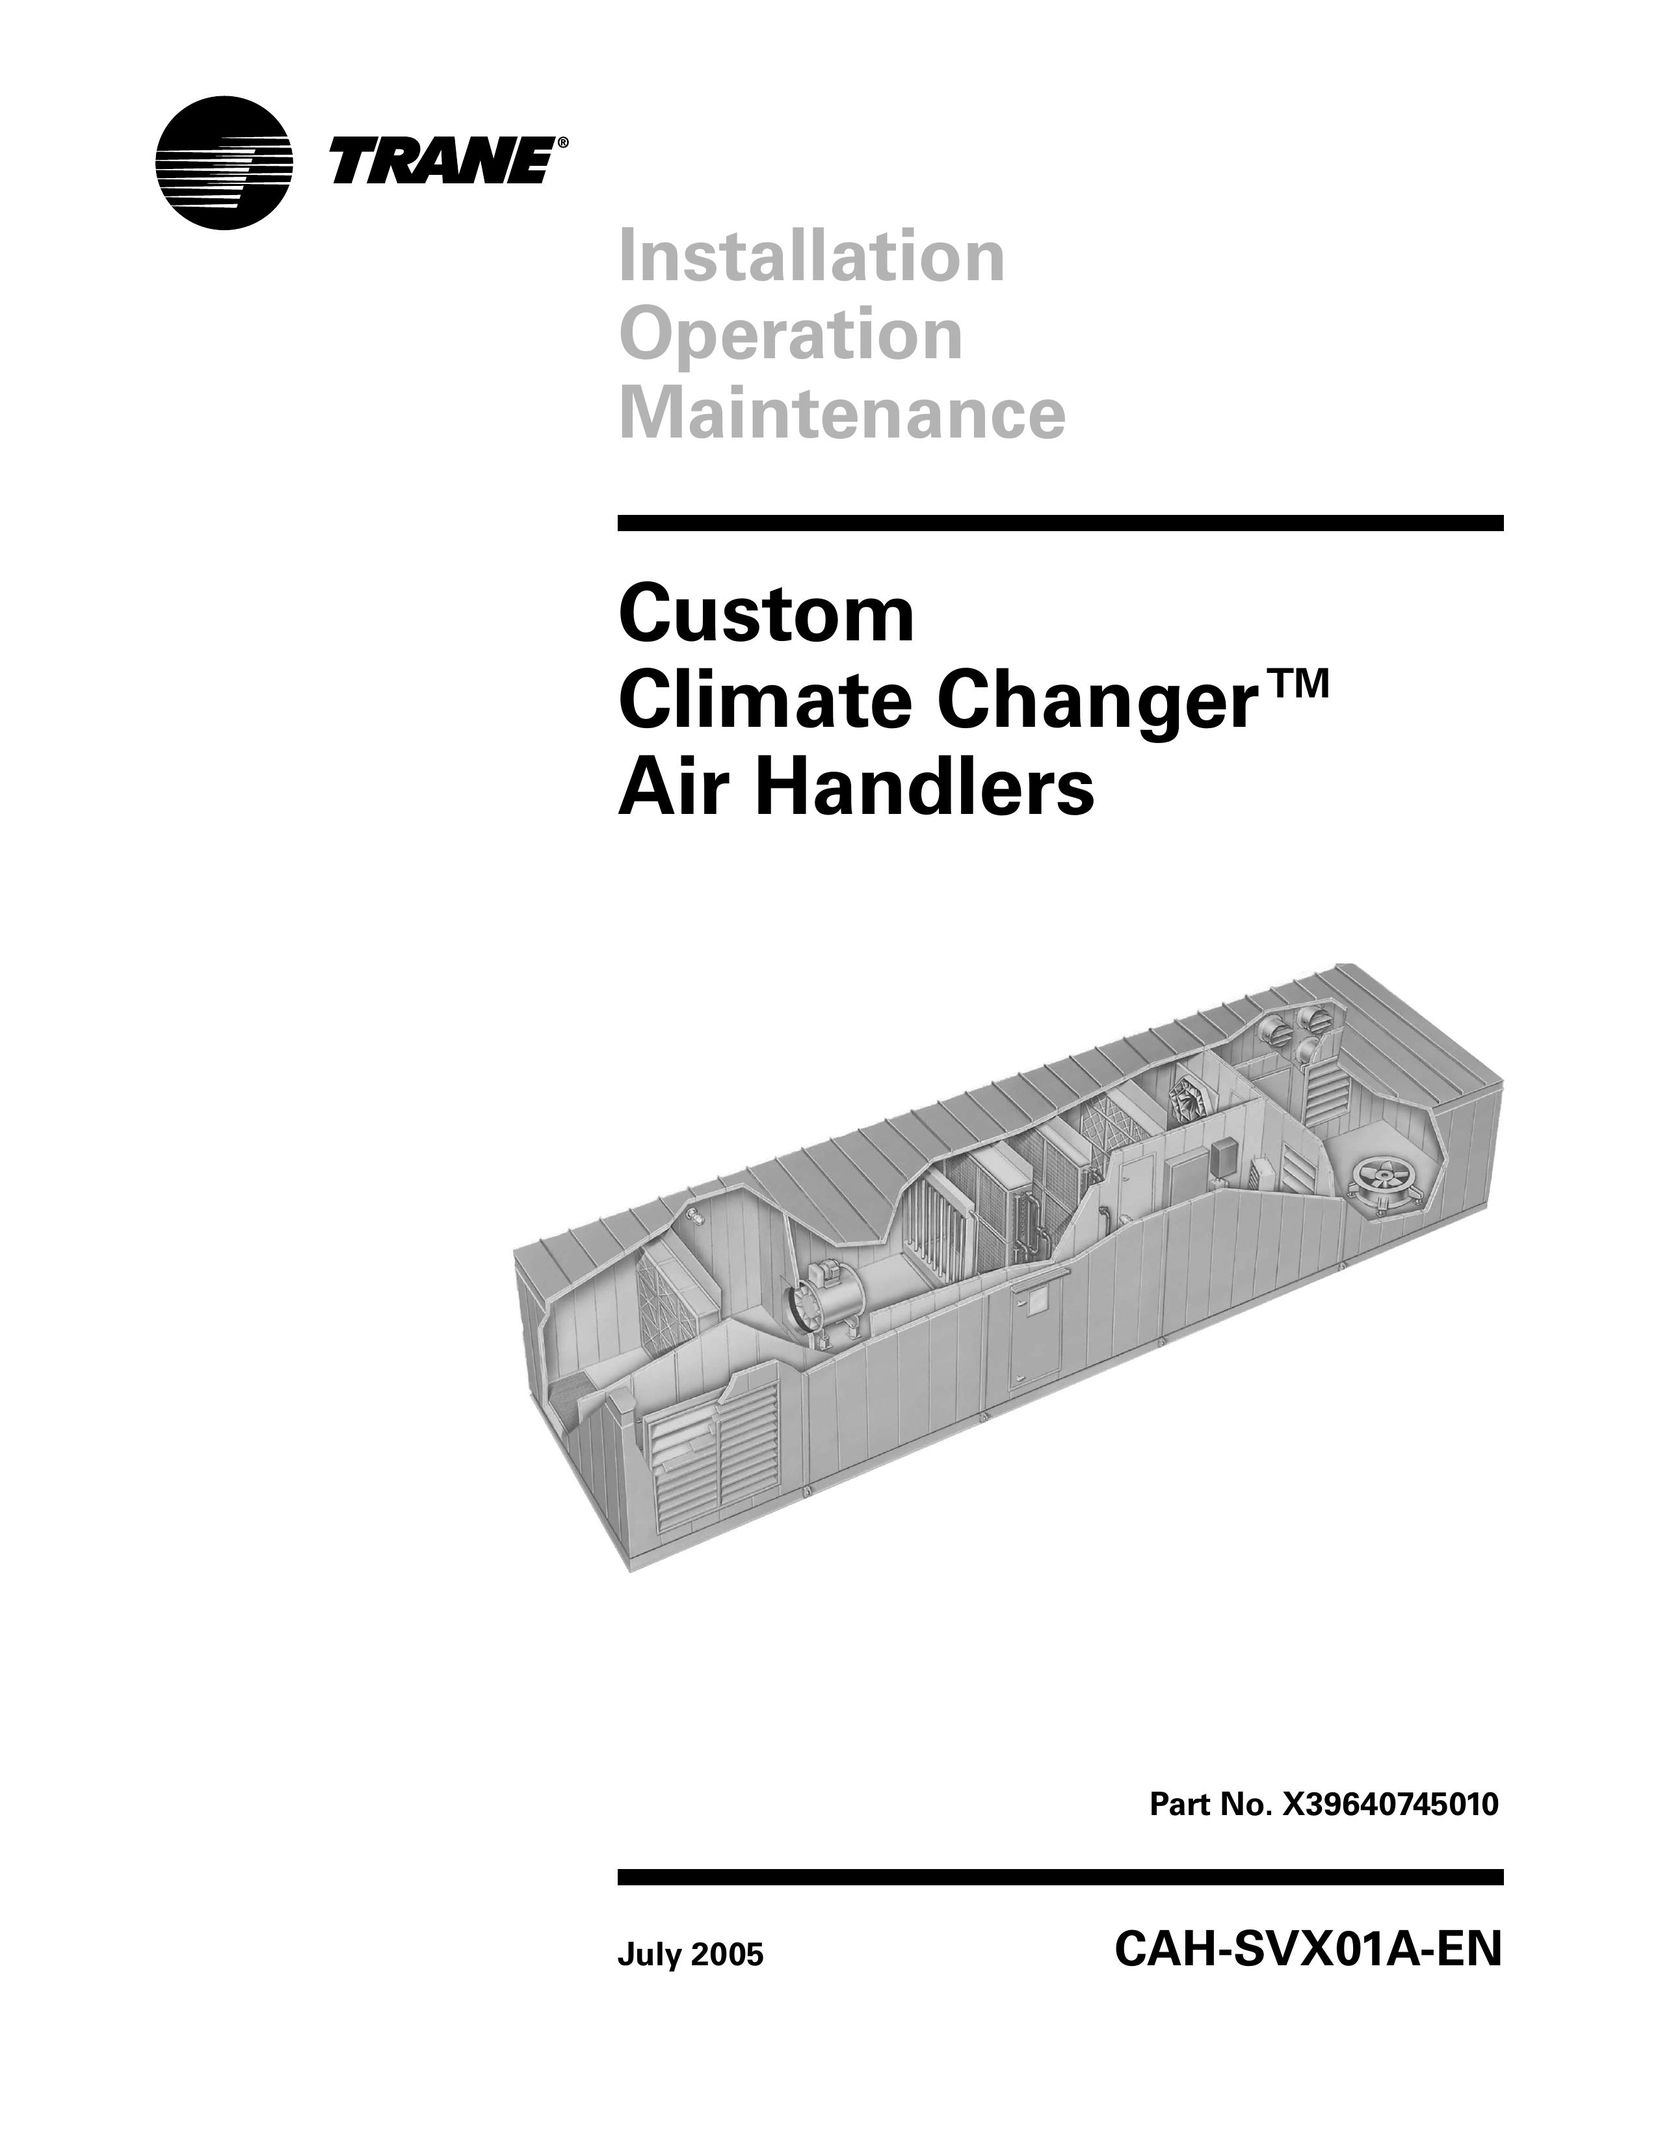 Trane Custom Climate Changer Air Handlers Air Cleaner User Manual